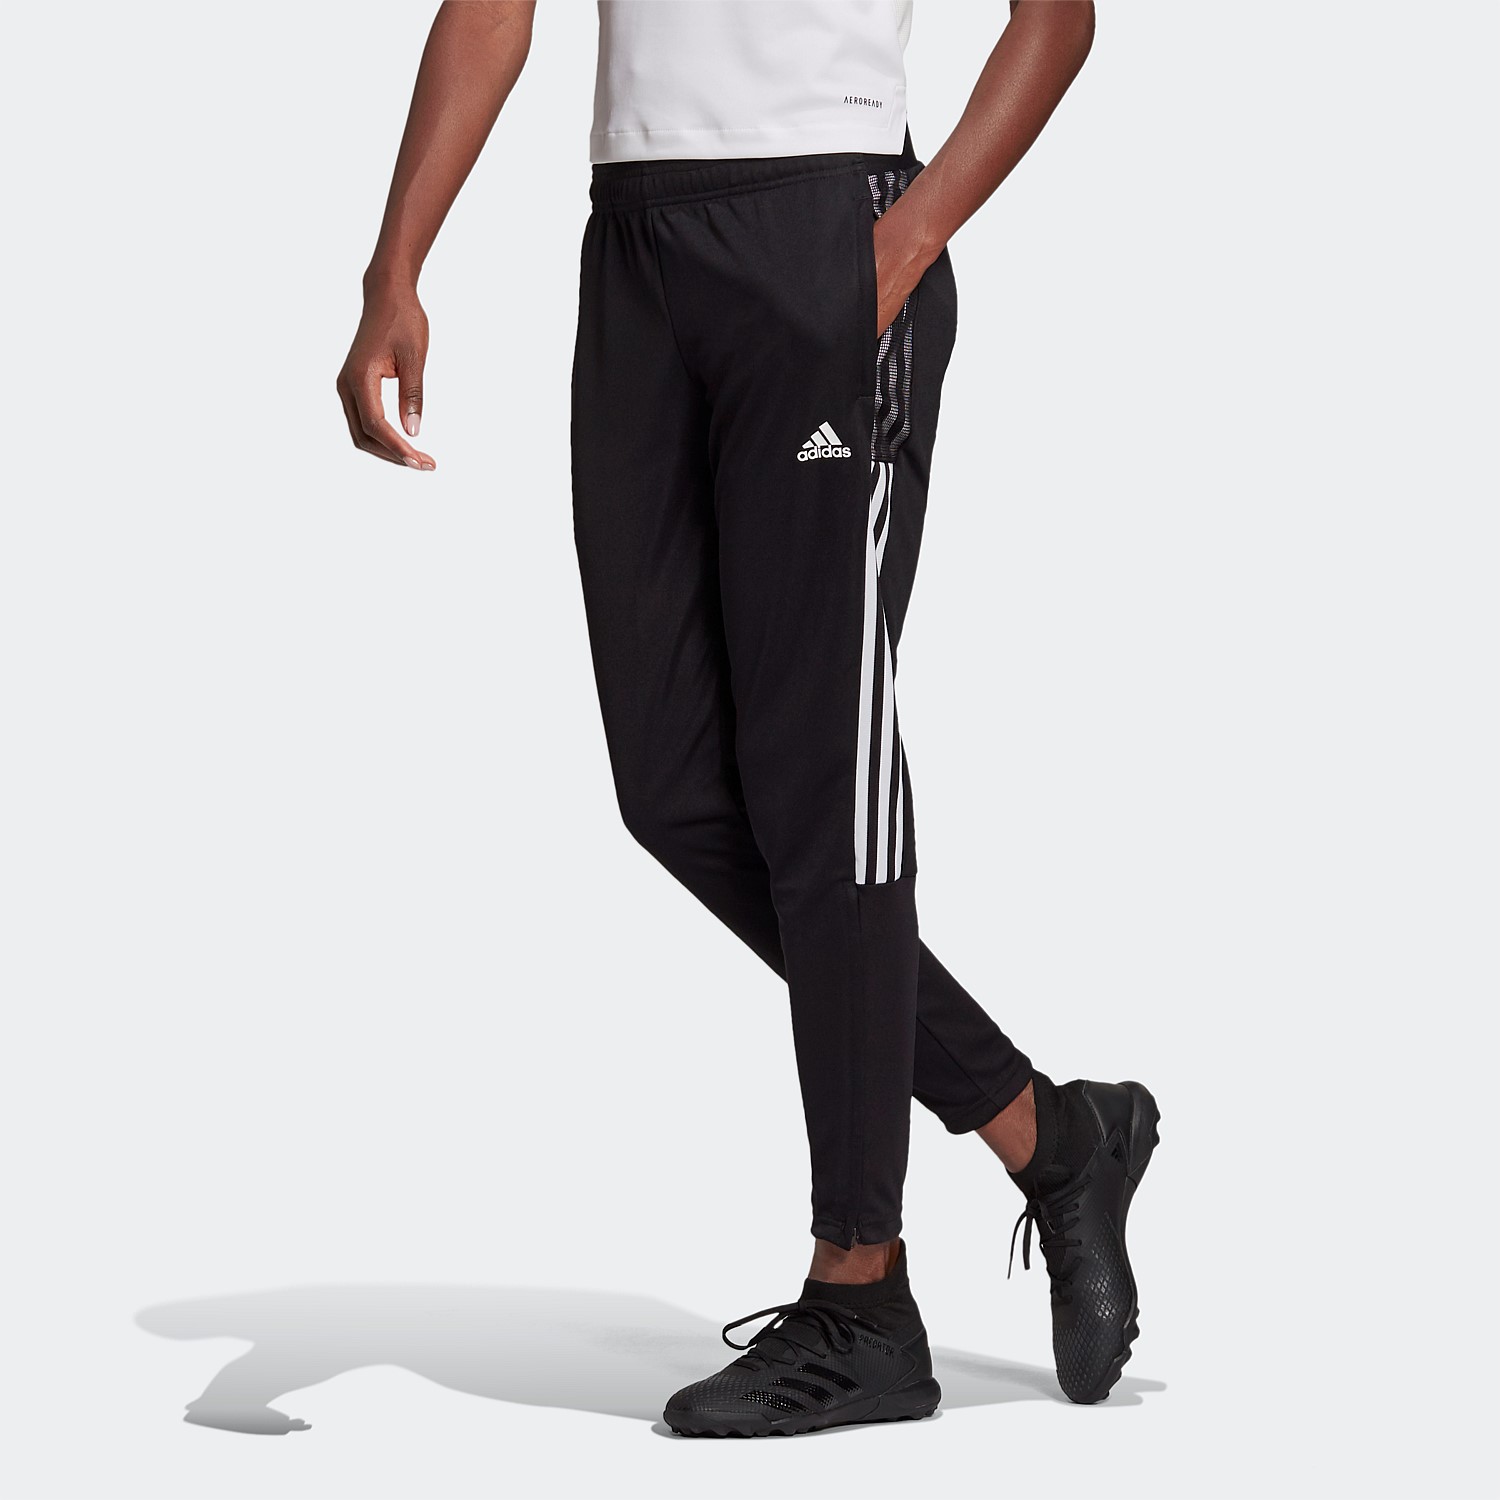 adidas Climalite Athletic Pants Women's Black/White 